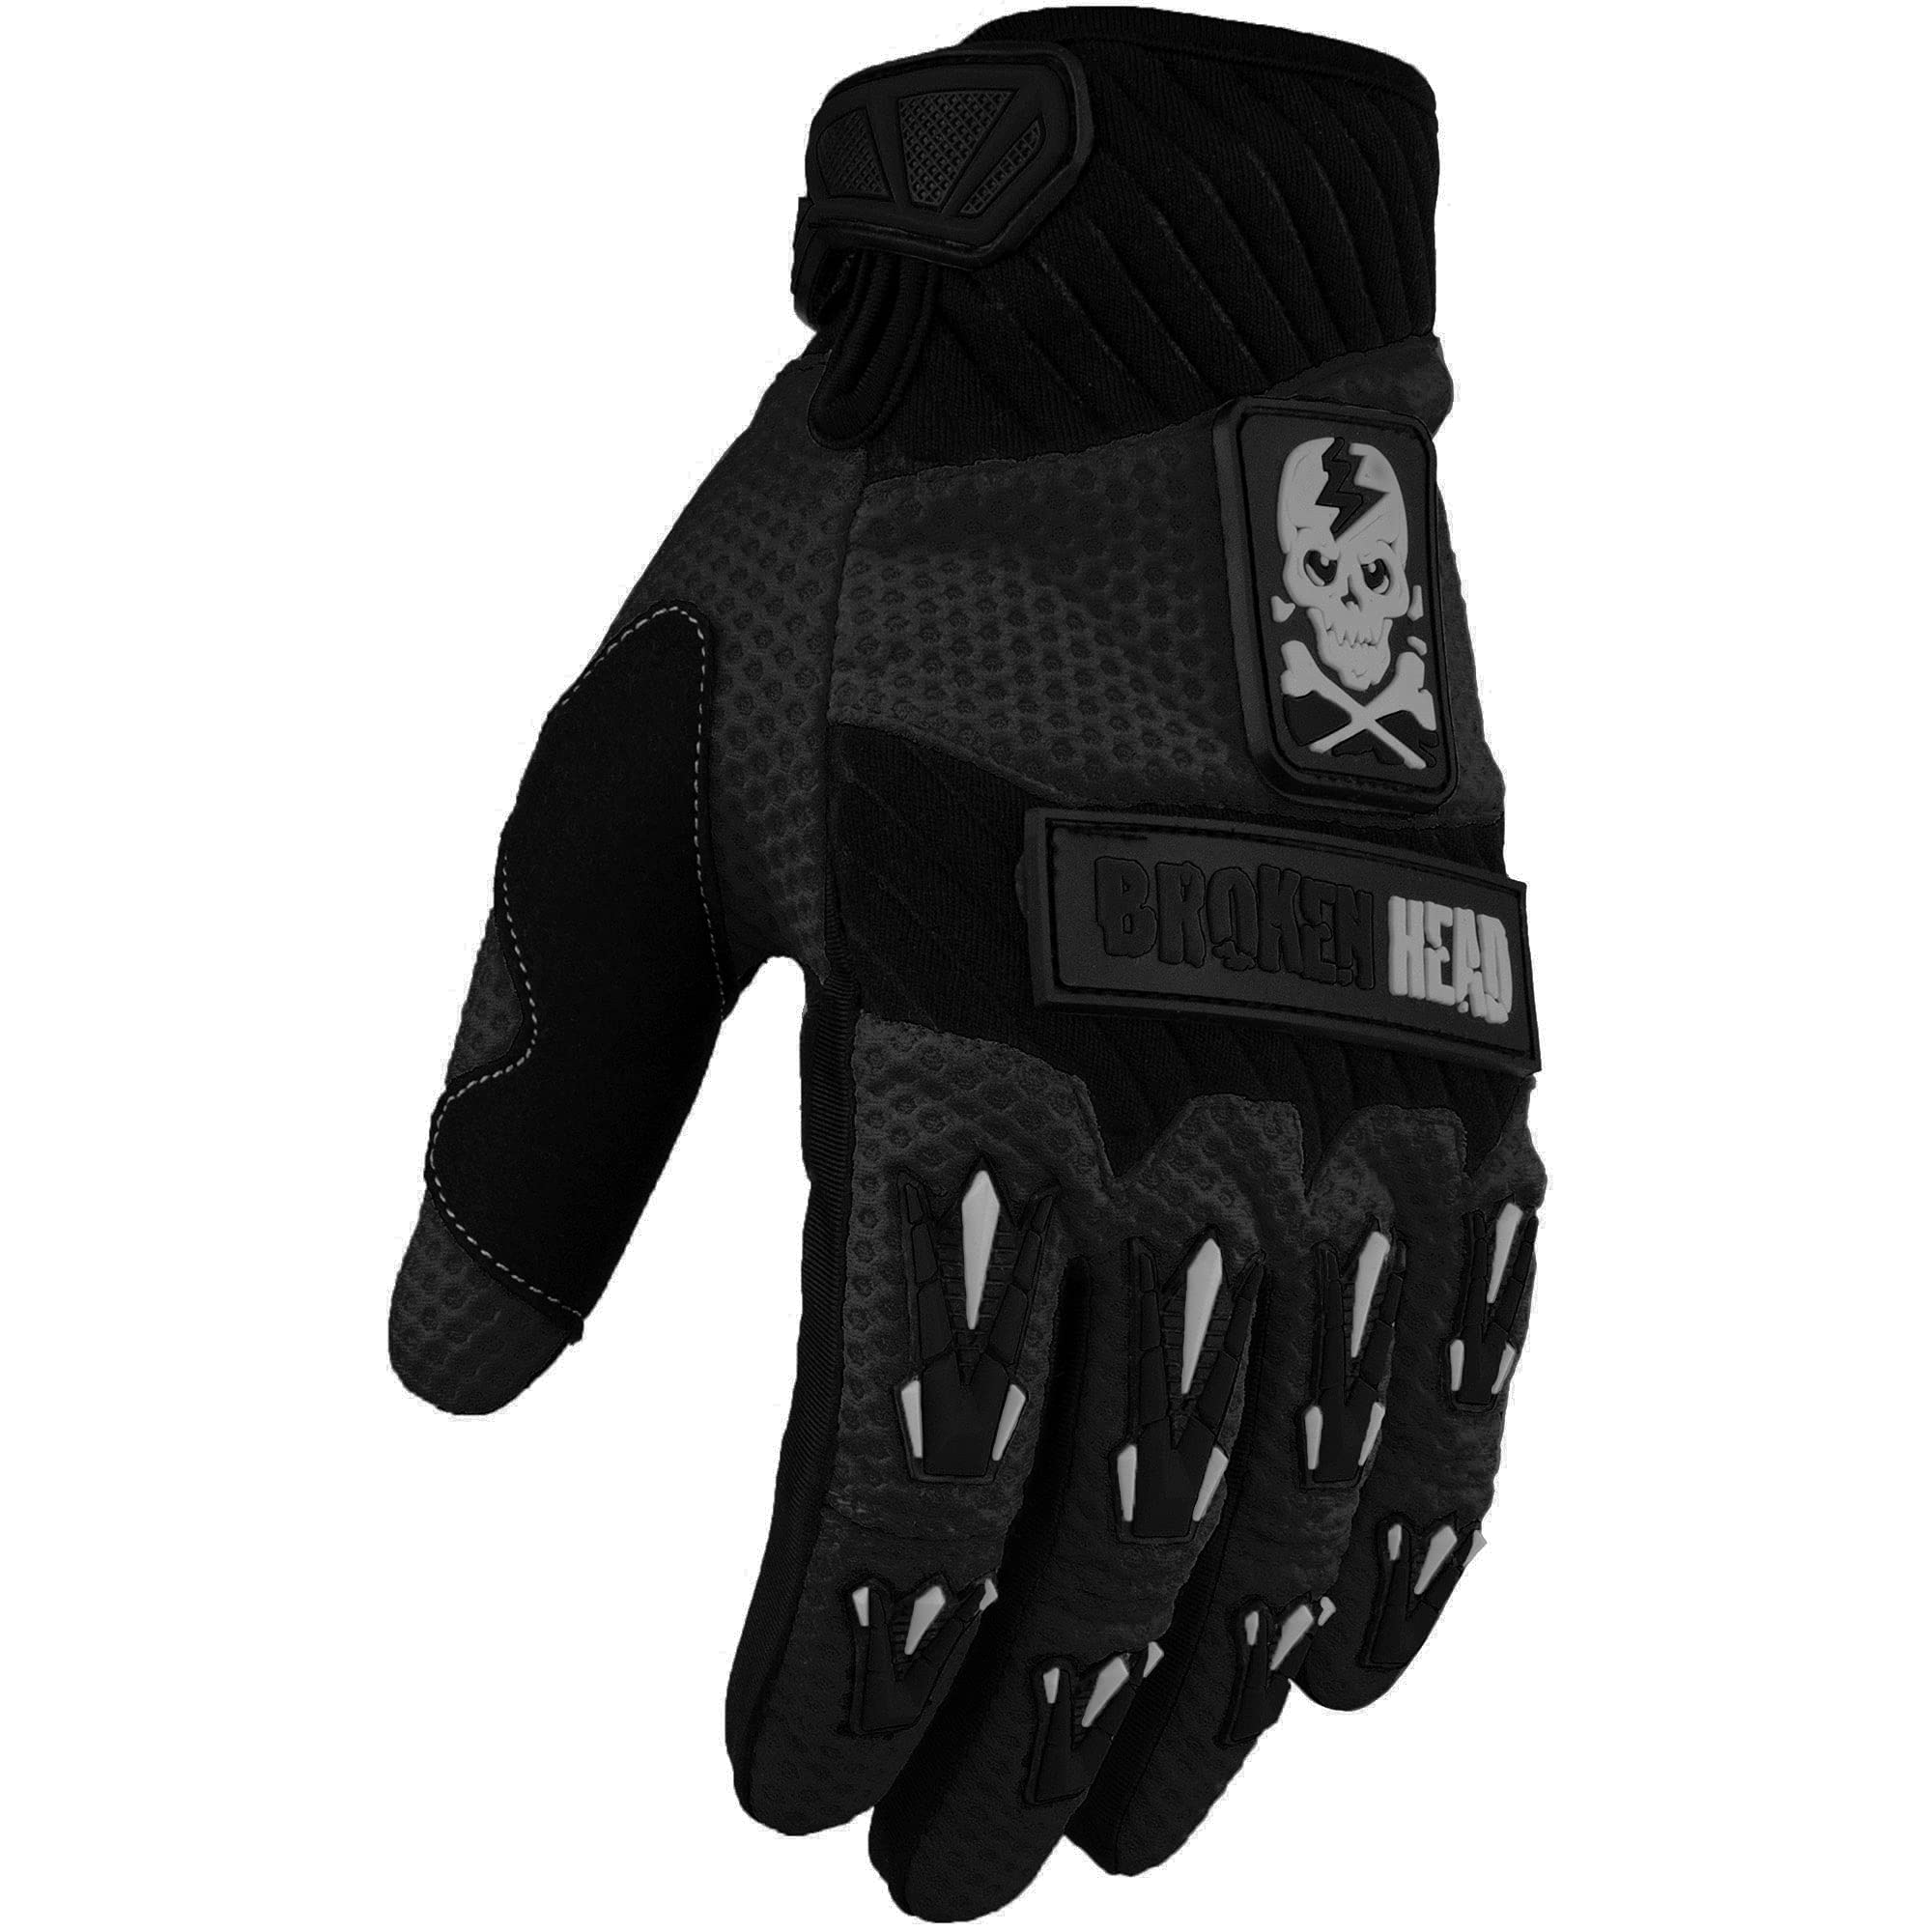 Broken Head MX-Handschuhe Faustschlag - Motorrad-Handschuhe Für Motocross, Enduro, Mountainbike - Schwarz (L)